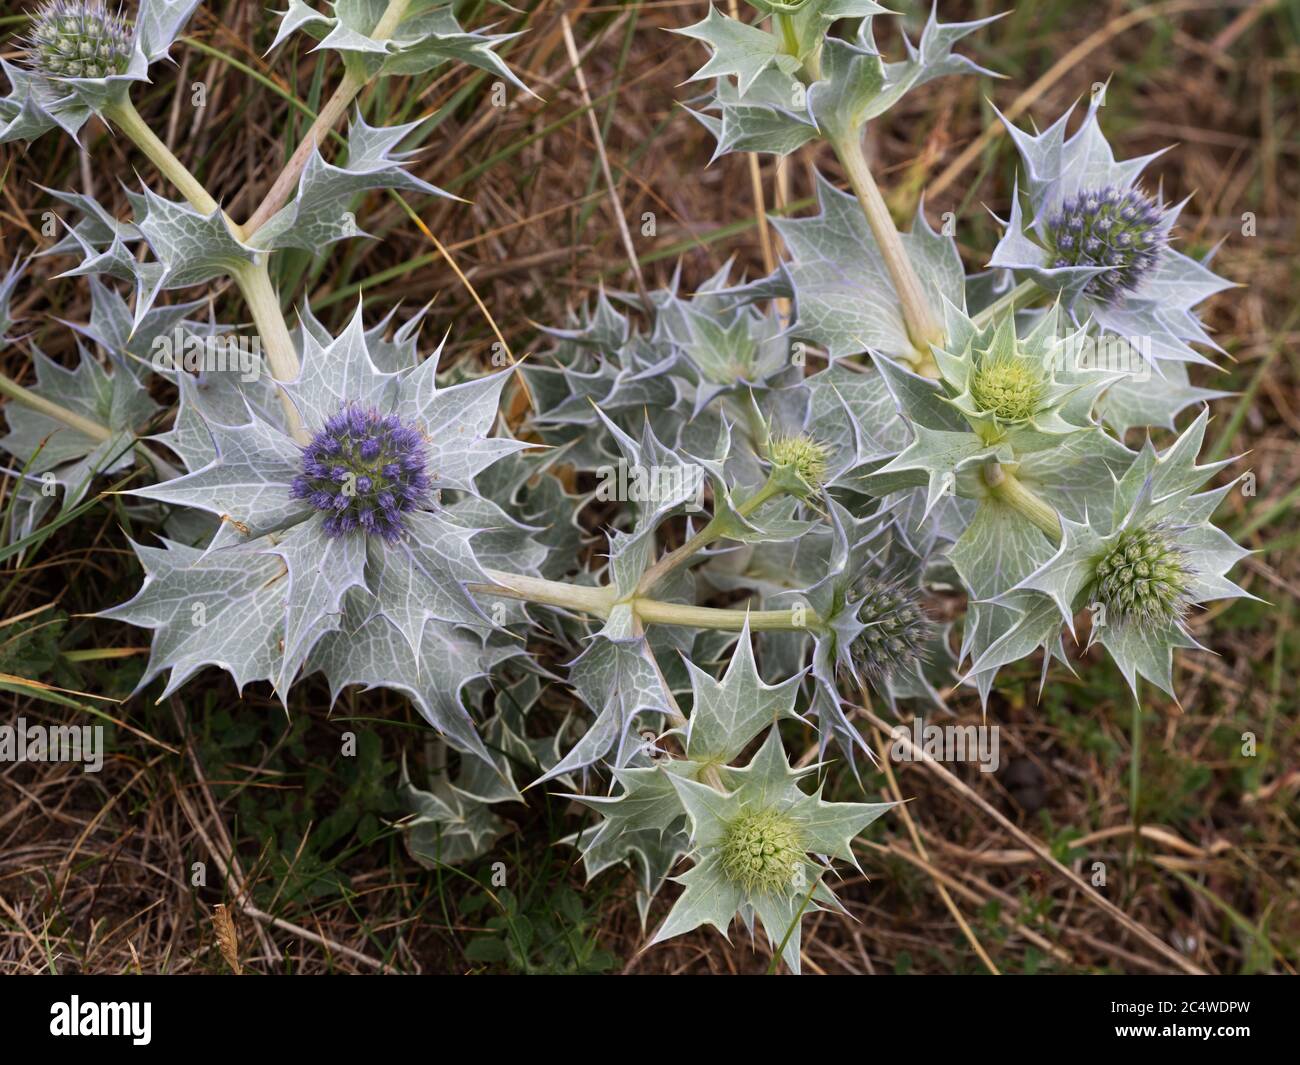 Sea holly aka Eryngo plant in flower. Eryngium maritimum. Historical aphrodisiac. Stock Photo